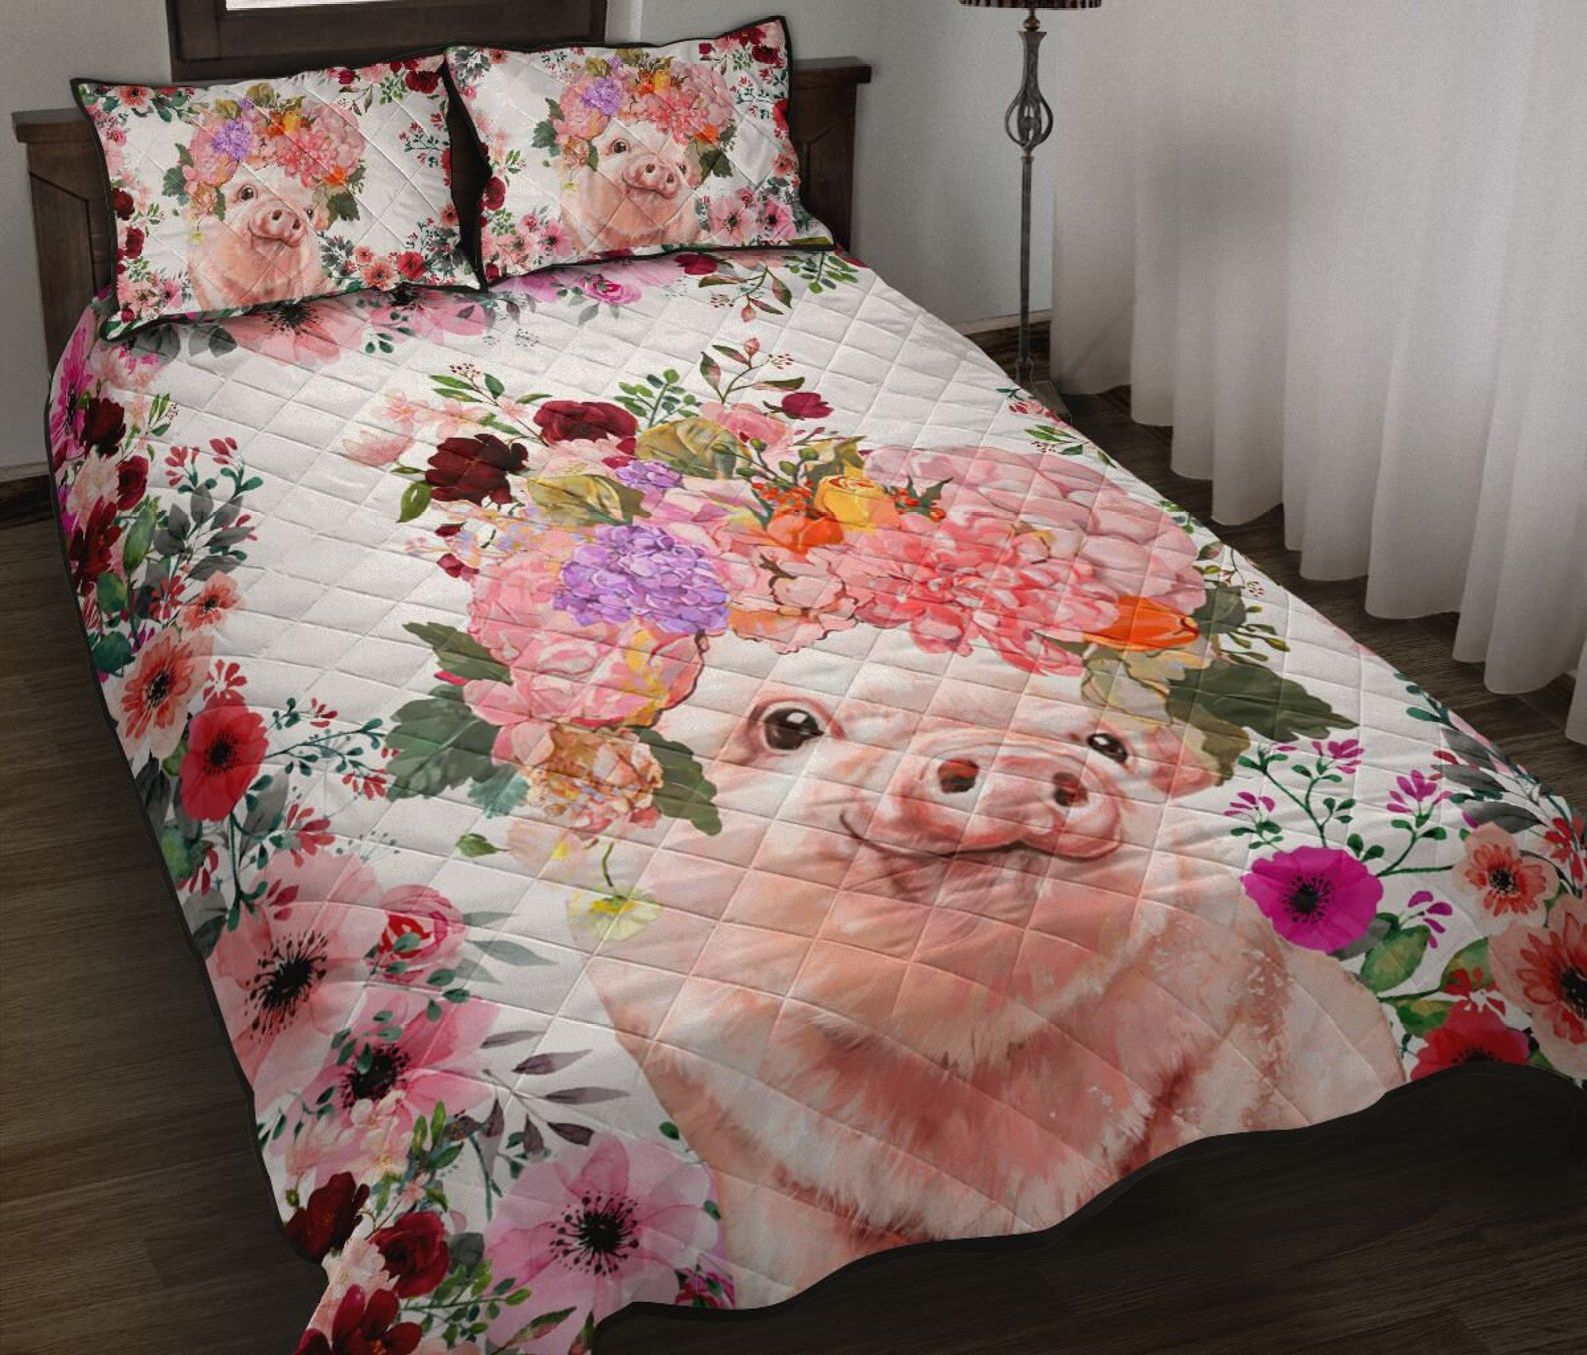 Lovely Pig And Flower Quilt Bedding Set Cotton Bed Sheets Spread Comforter Duvet Cover Bedding Sets